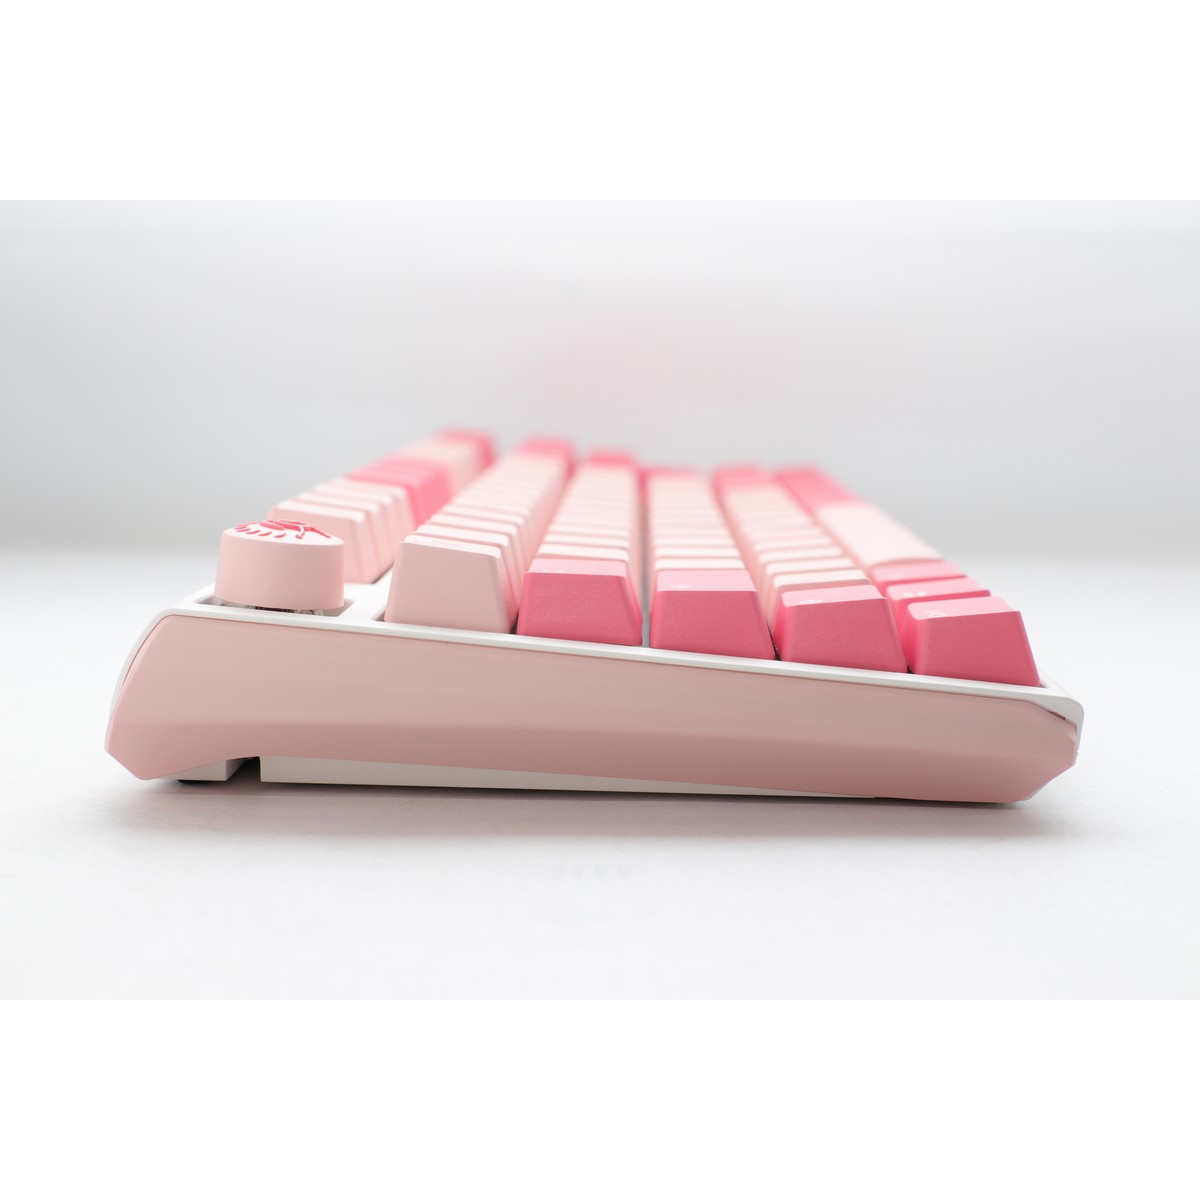 Ducky - Ducky One 3 Gossamer Pink TKL 80% USB Cherry MX Red Mechanical Gaming Keyboard U